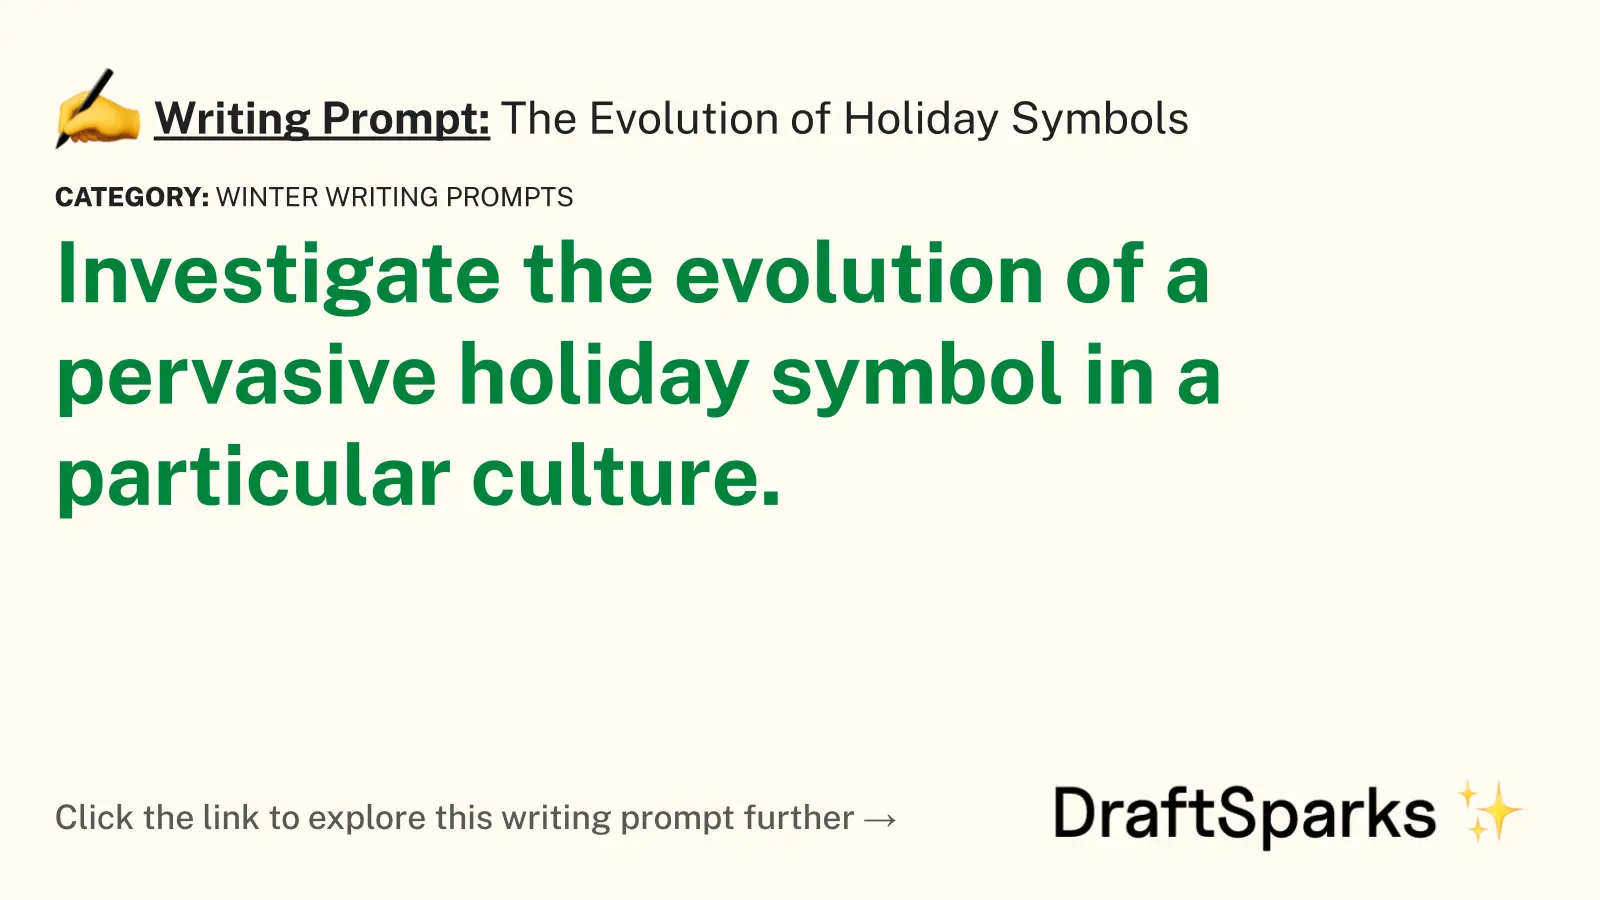 The Evolution of Holiday Symbols